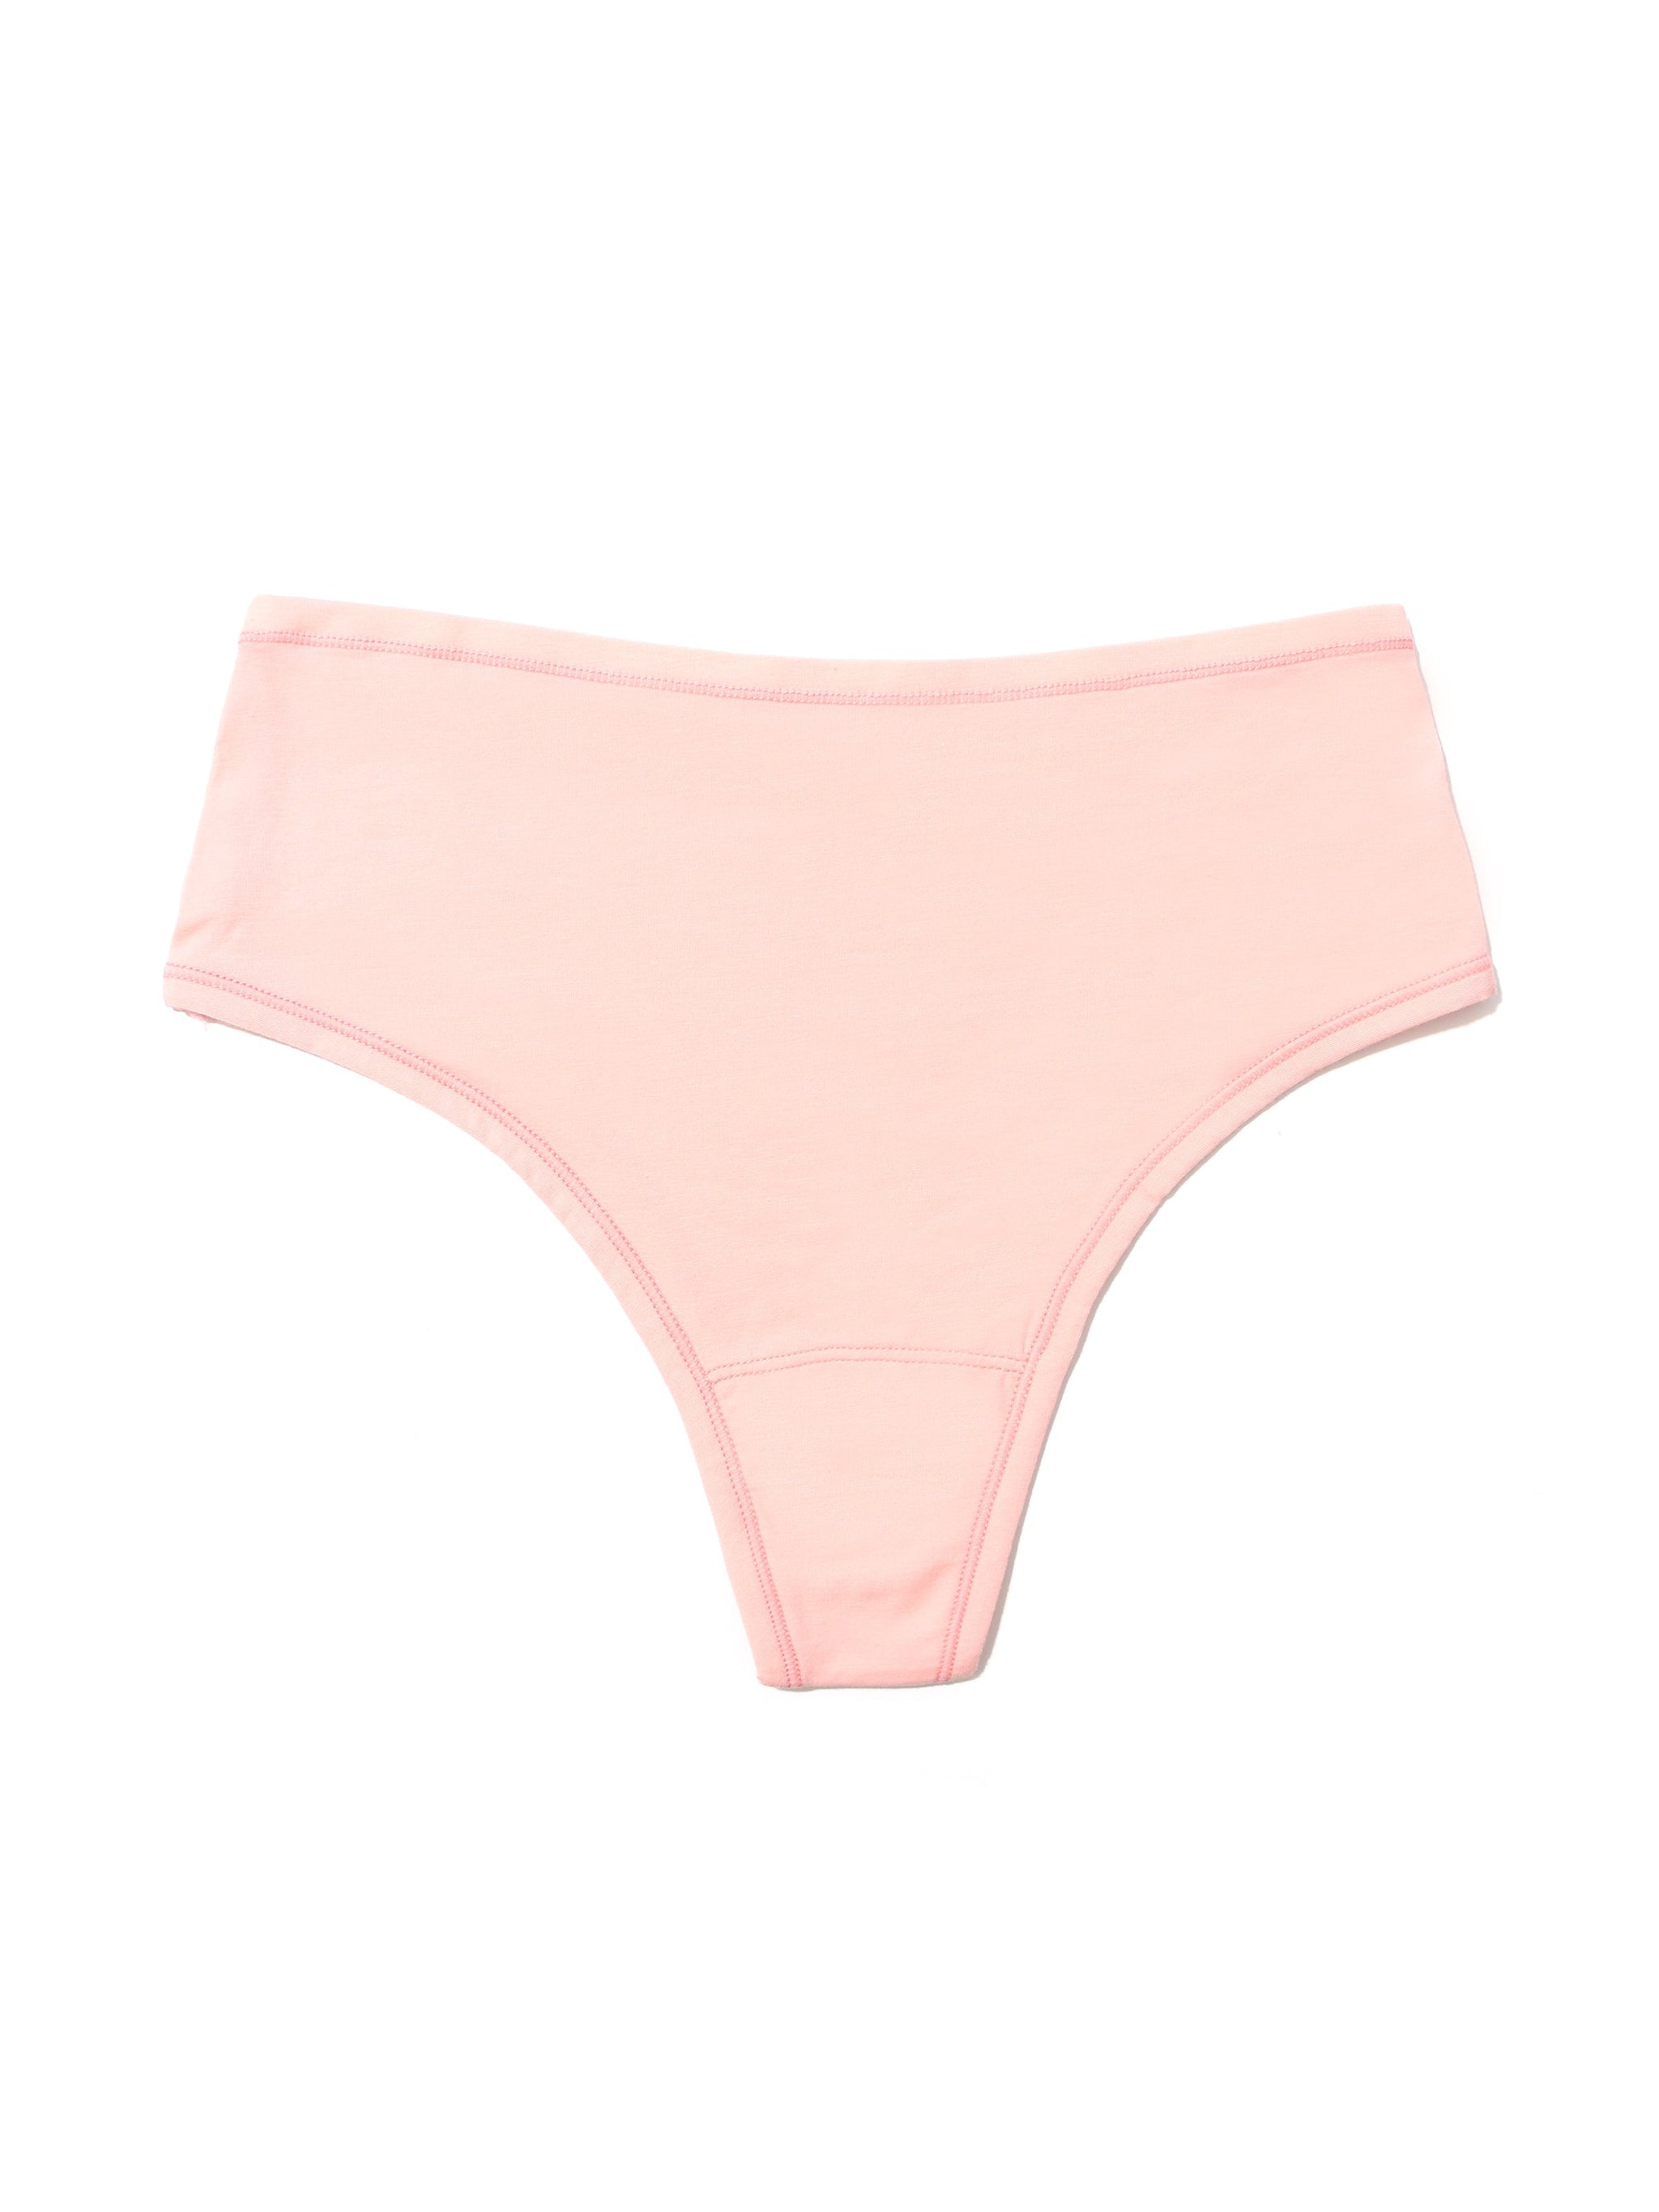 Three Colour Satin Panties Set / Light Pink, Mint and Lilac / Made to Order  -  Hong Kong